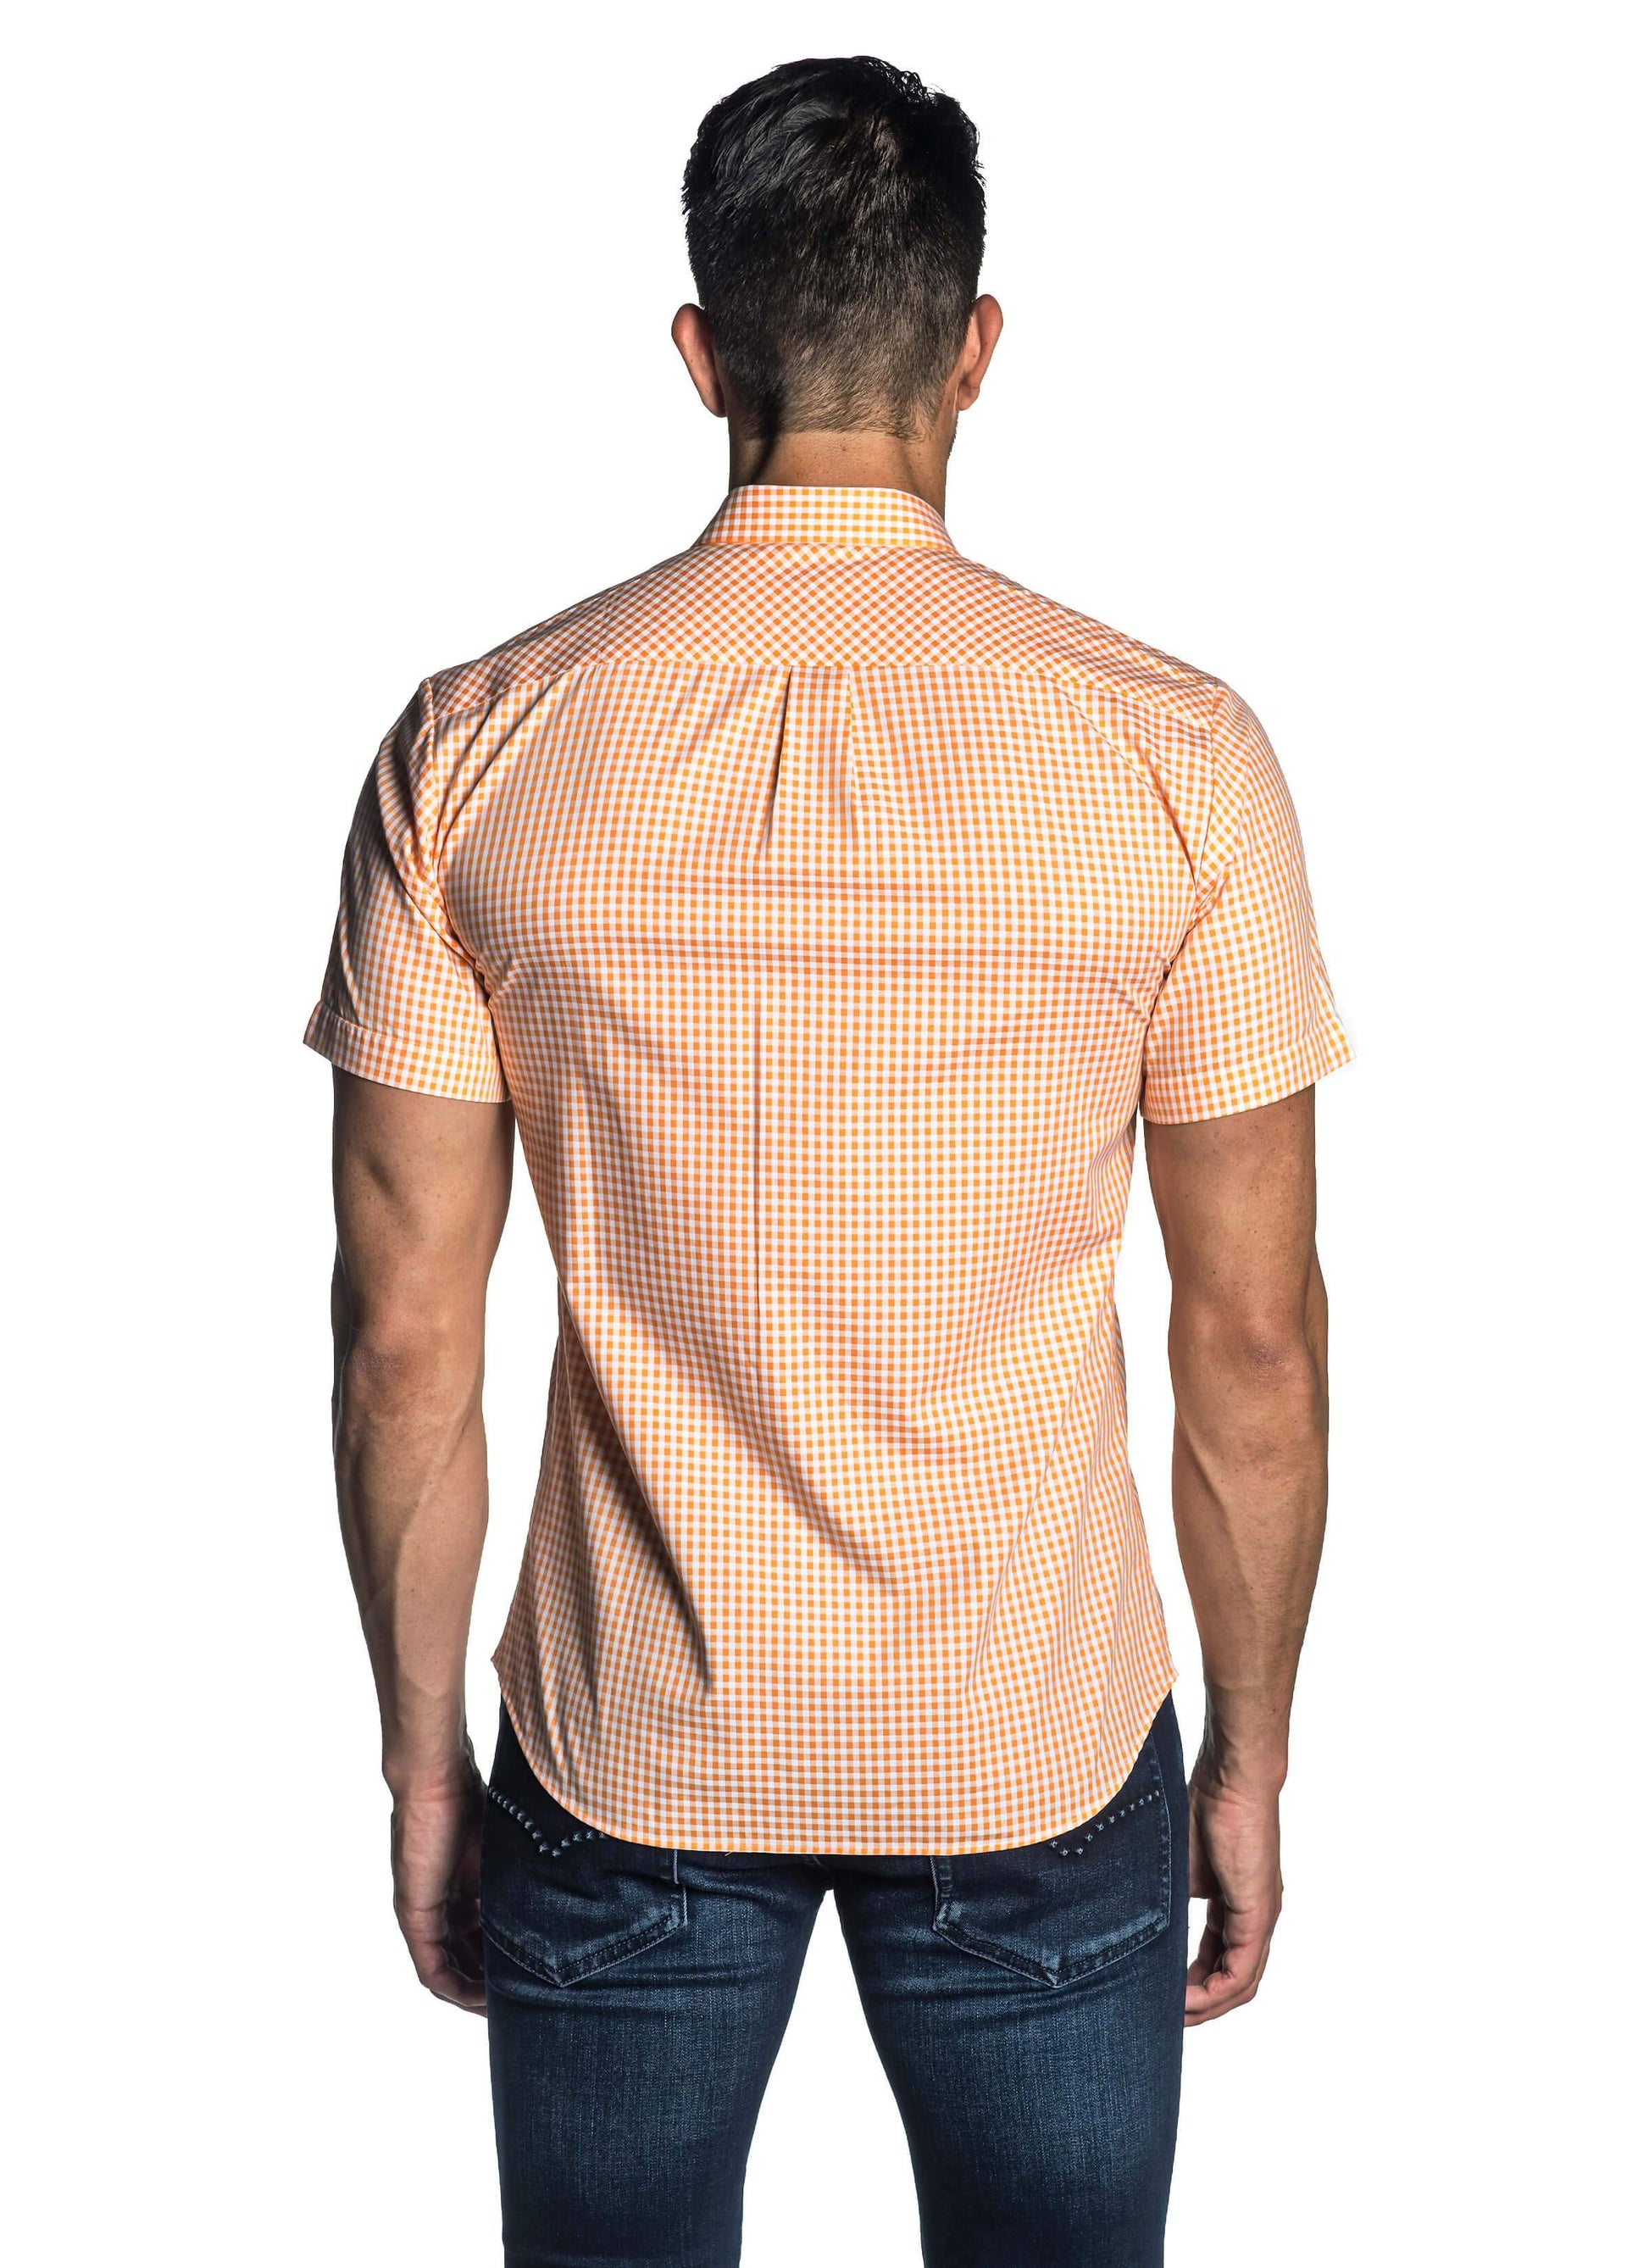 Orange Gingham Short Sleeve Shirt for Men AH-OT-7133-SS - Back - Jared Lang